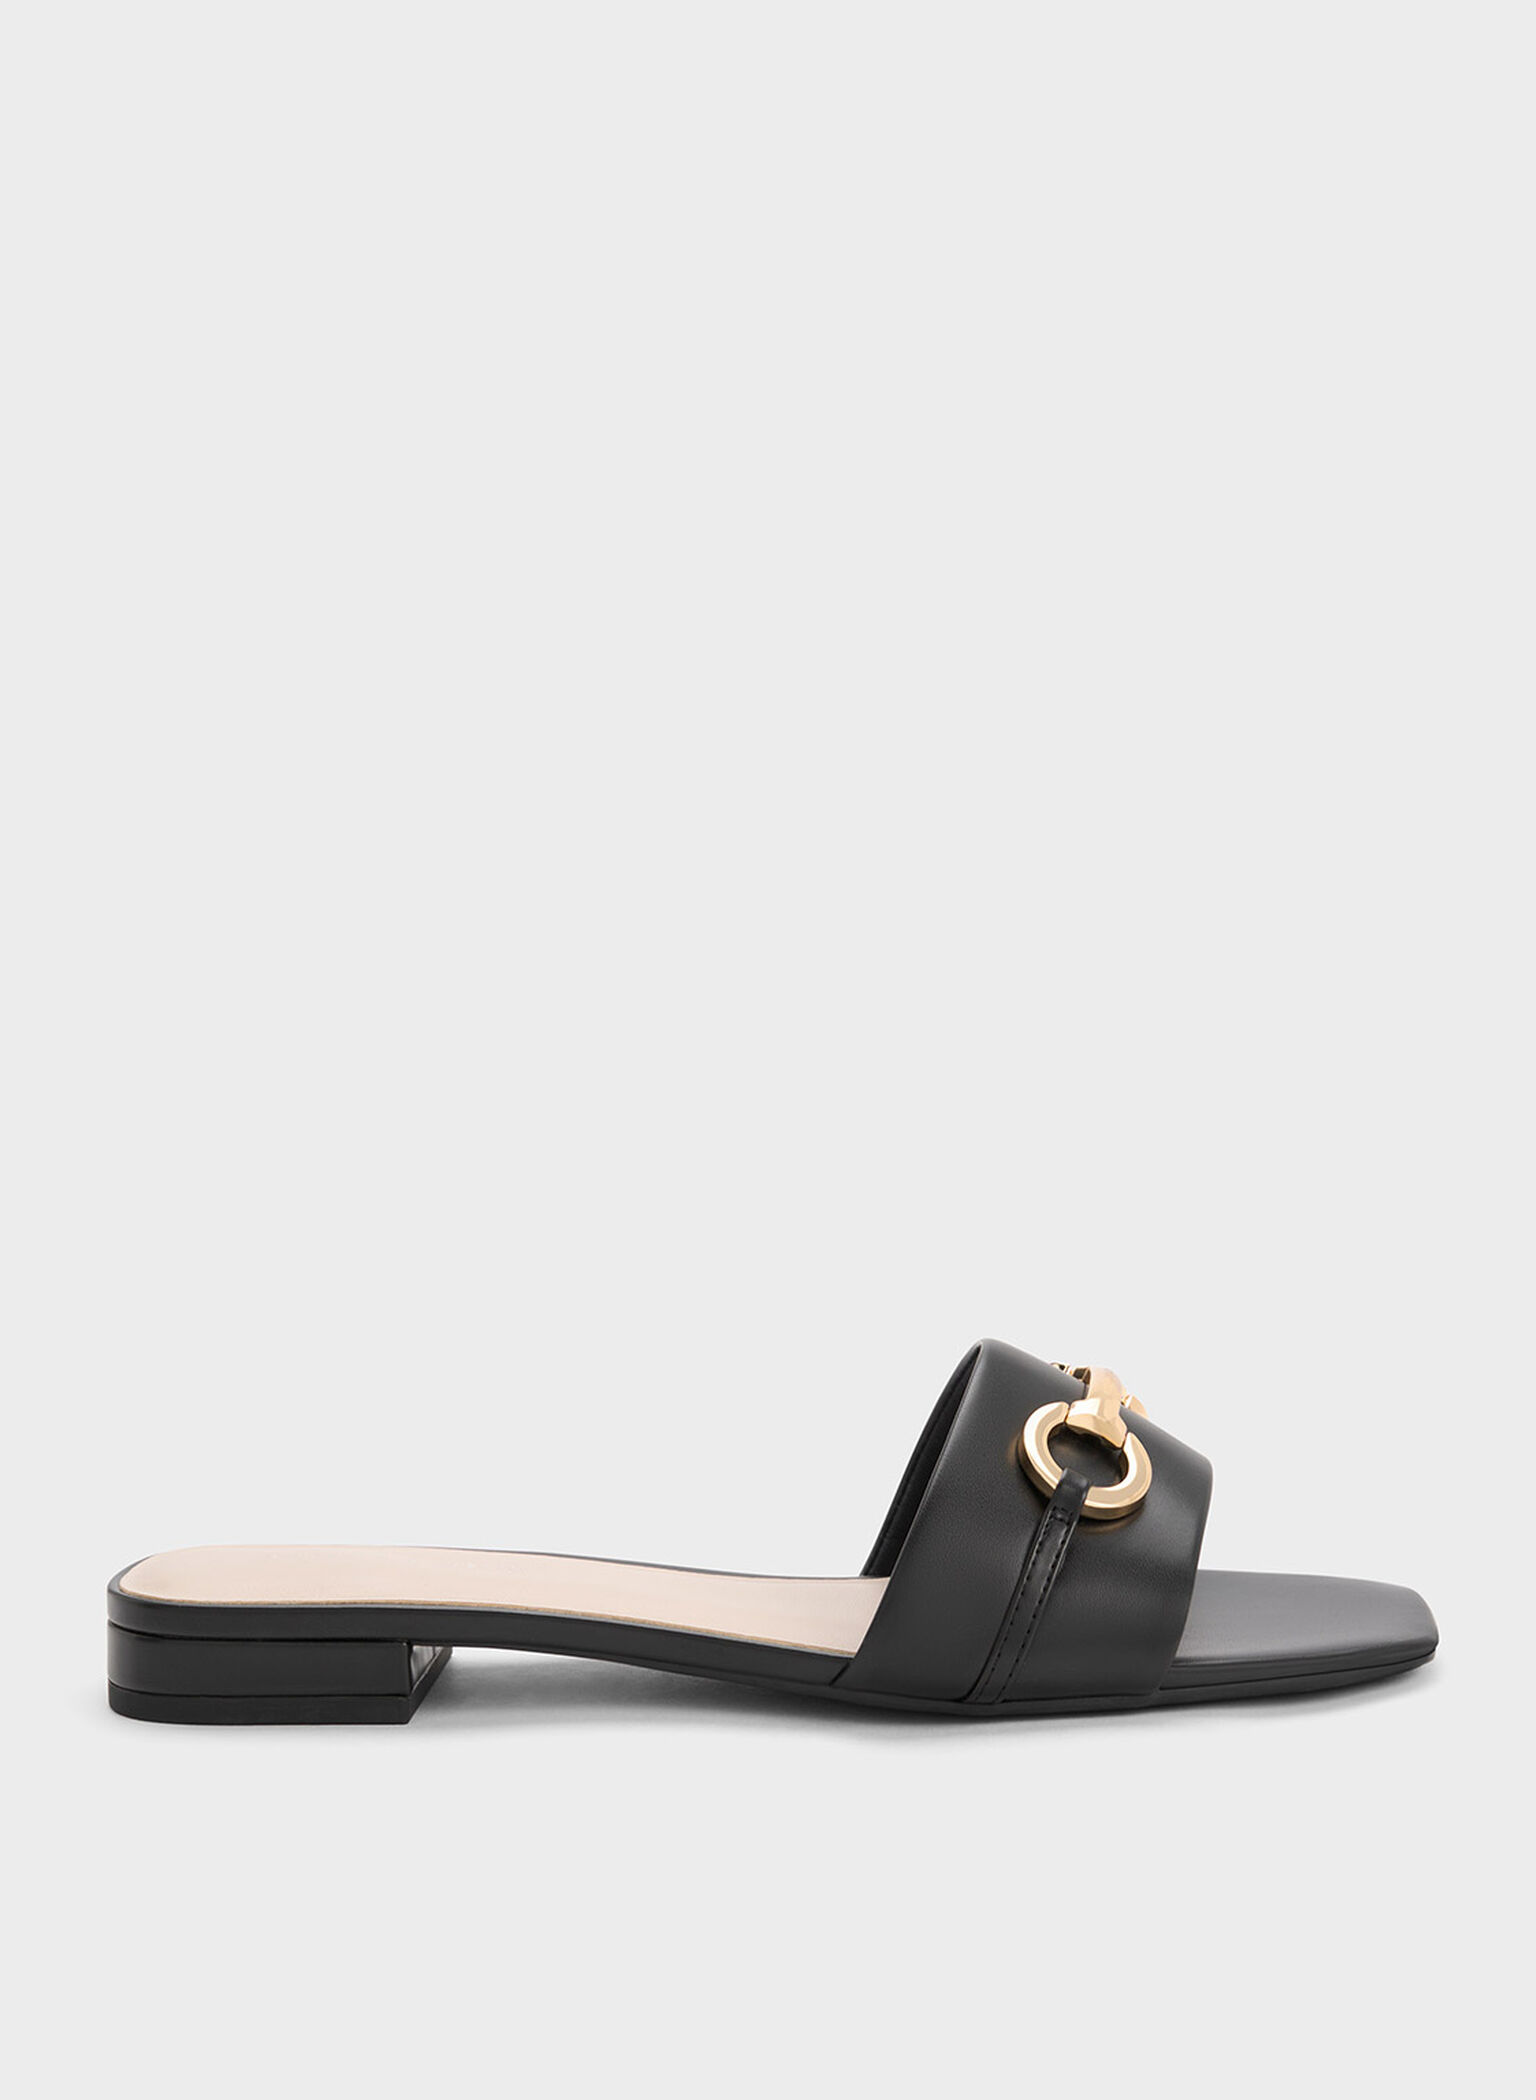 Metallic Bar Slide Sandals, Black, hi-res